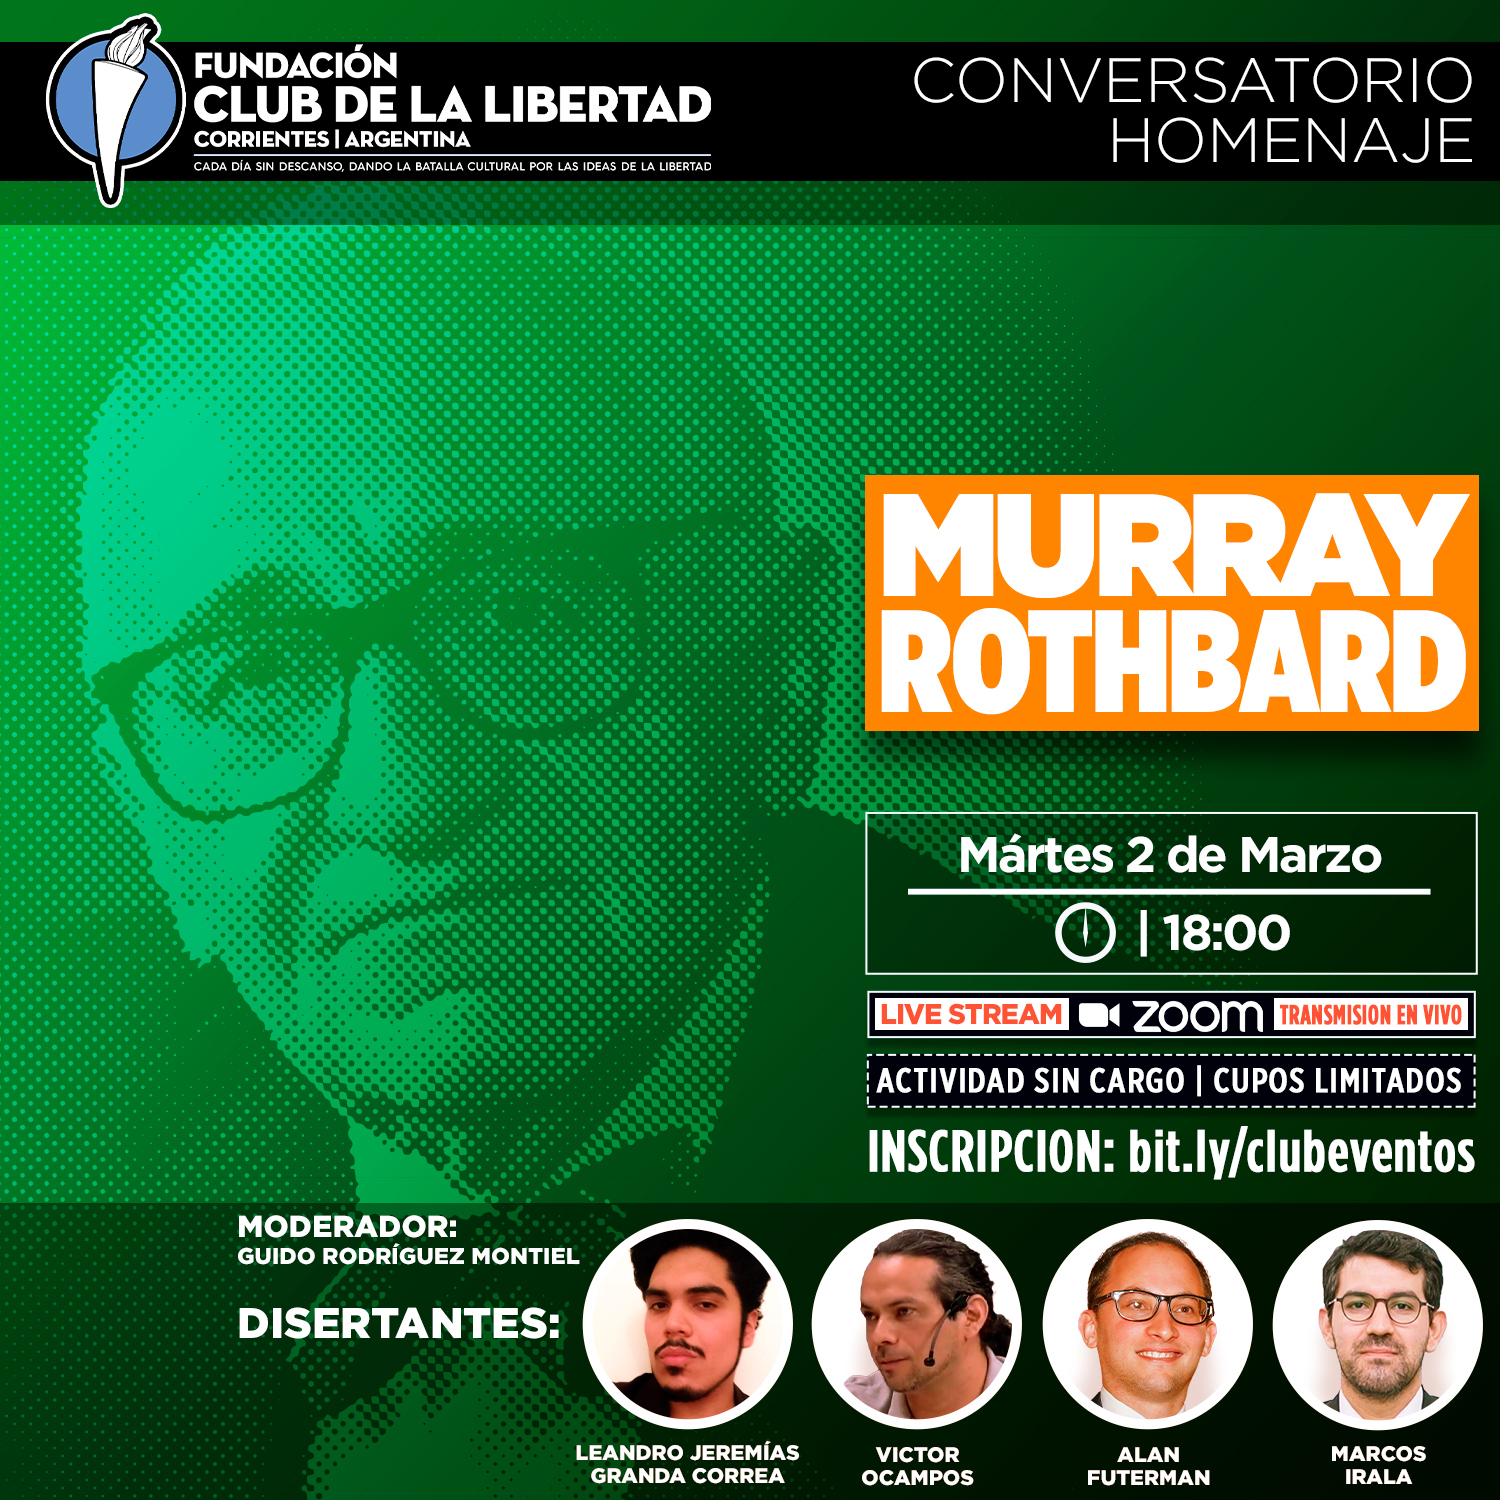 En este momento estás viendo Conversatorio homenaje Murray Rothbard